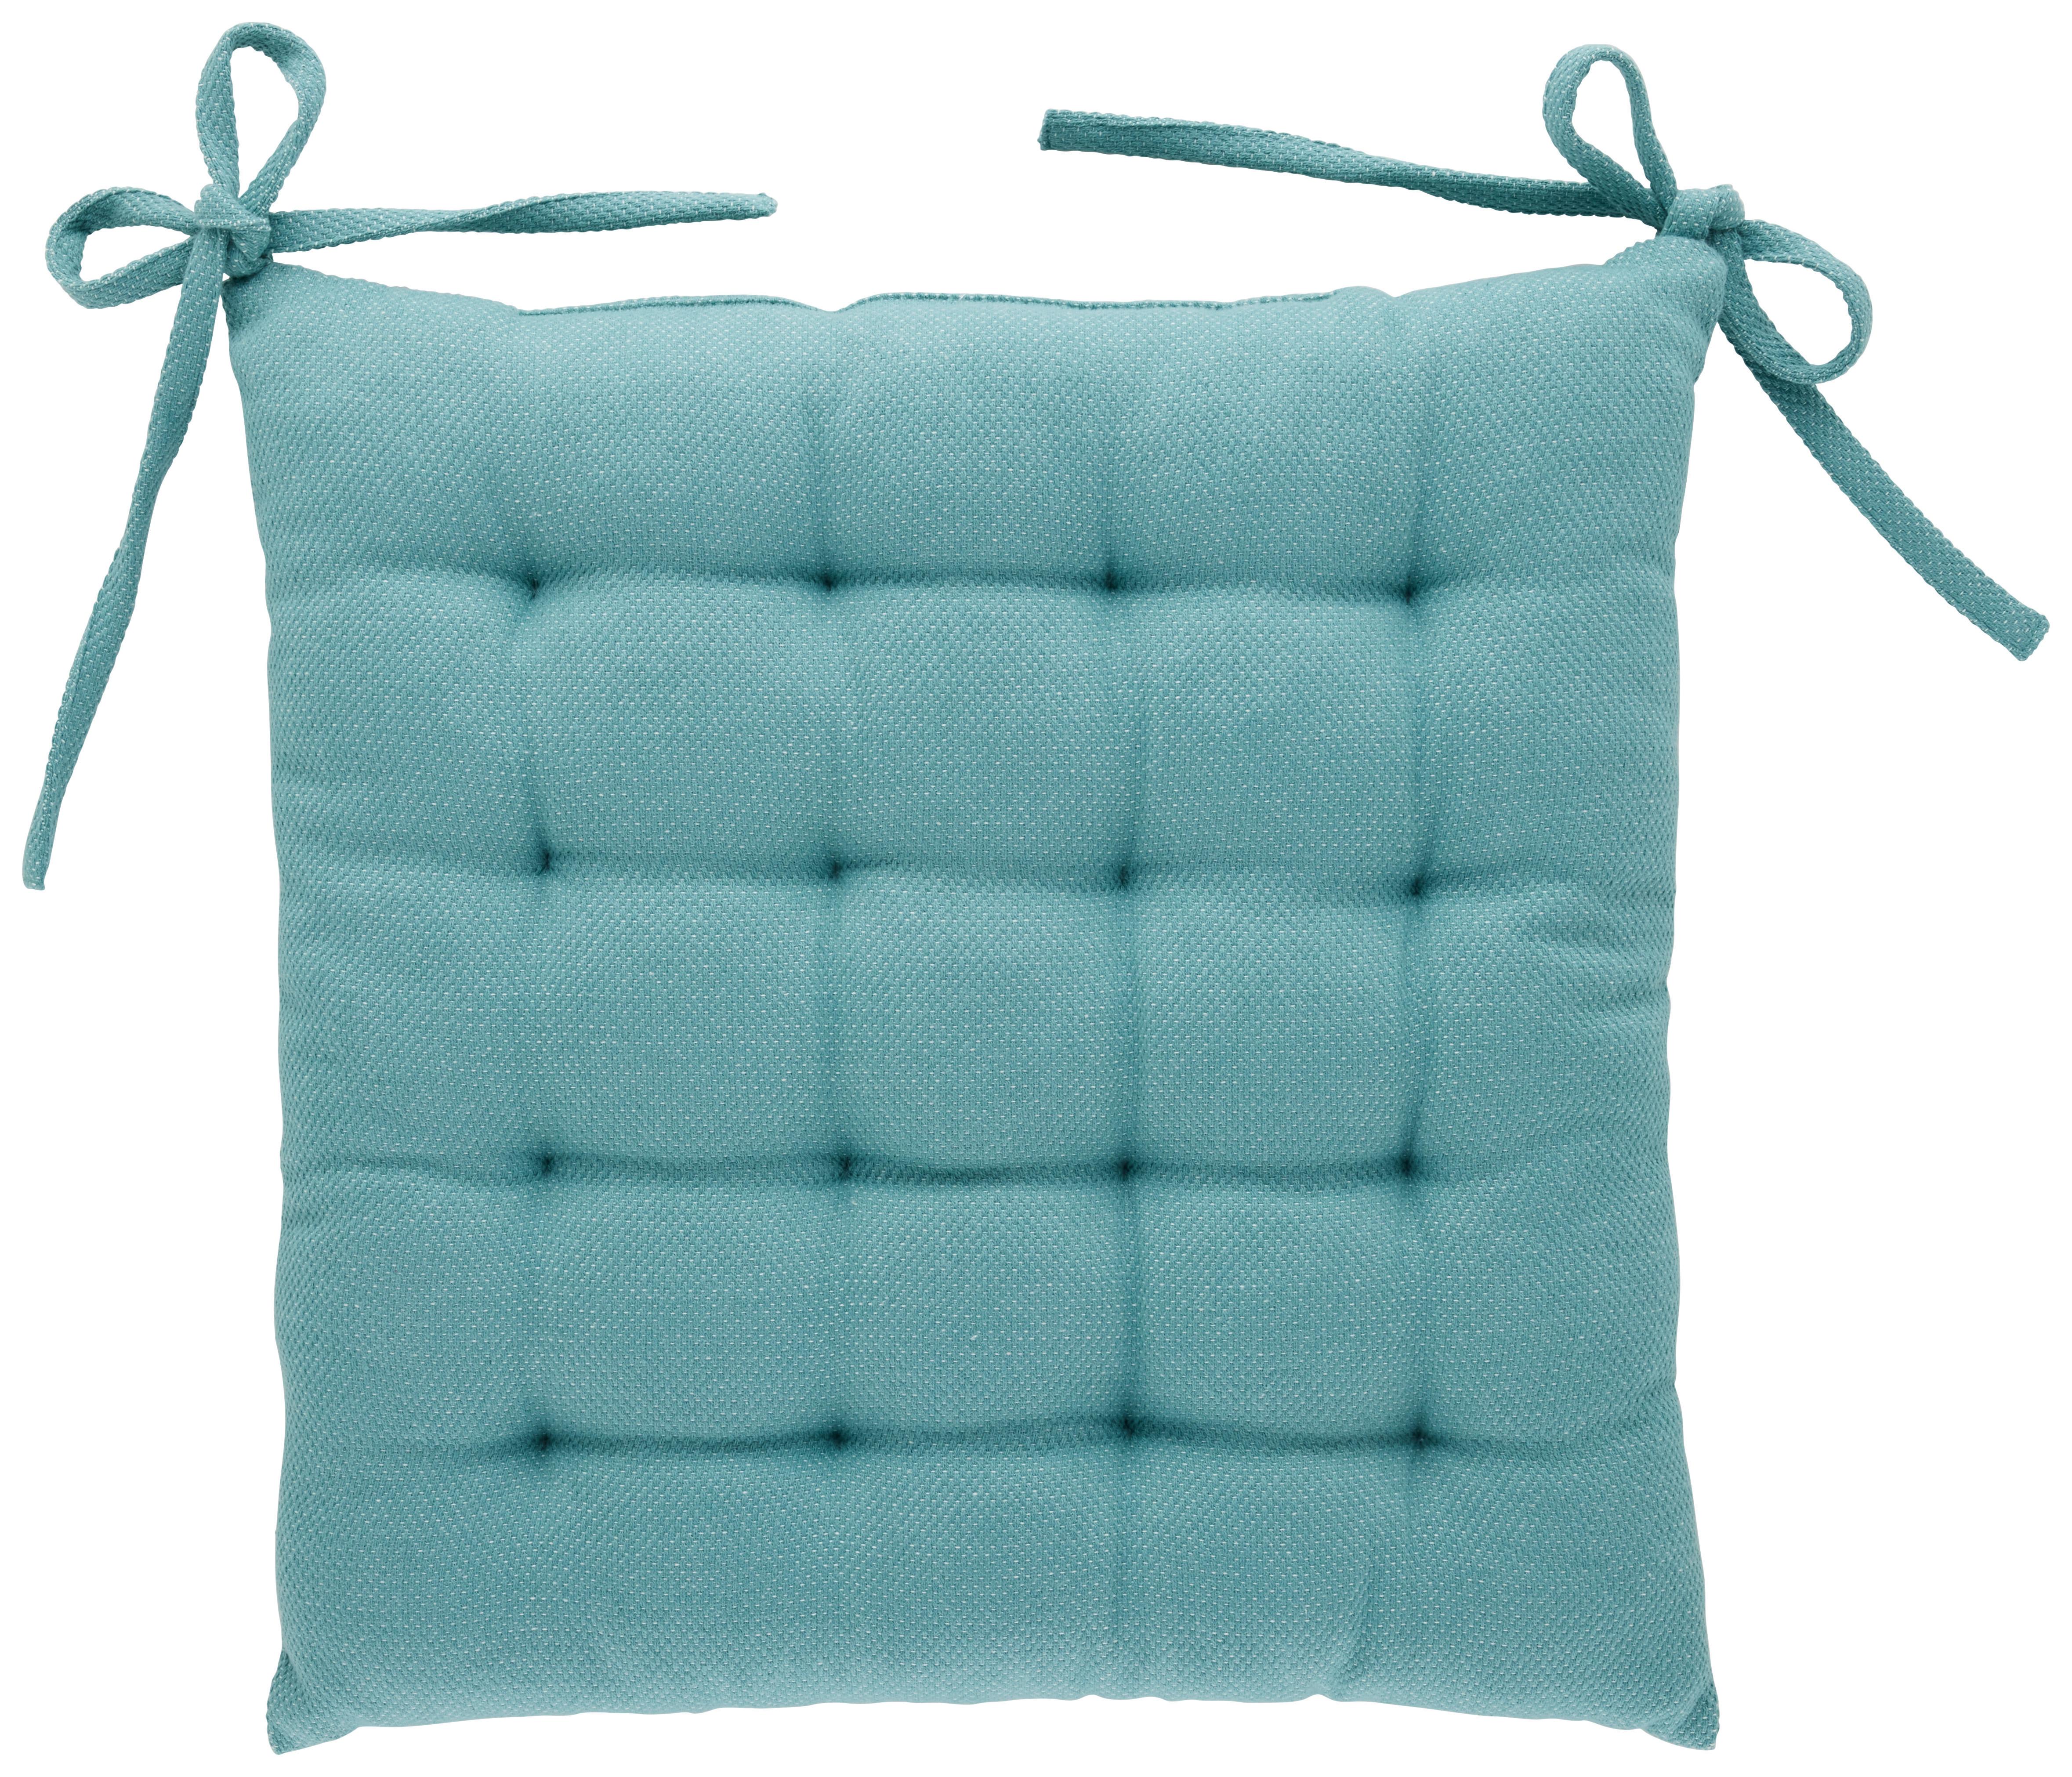 Sitzkissen Chris in Blau ca. 40x40cm - Blau, MODERN, Textil (40/40cm) - Premium Living